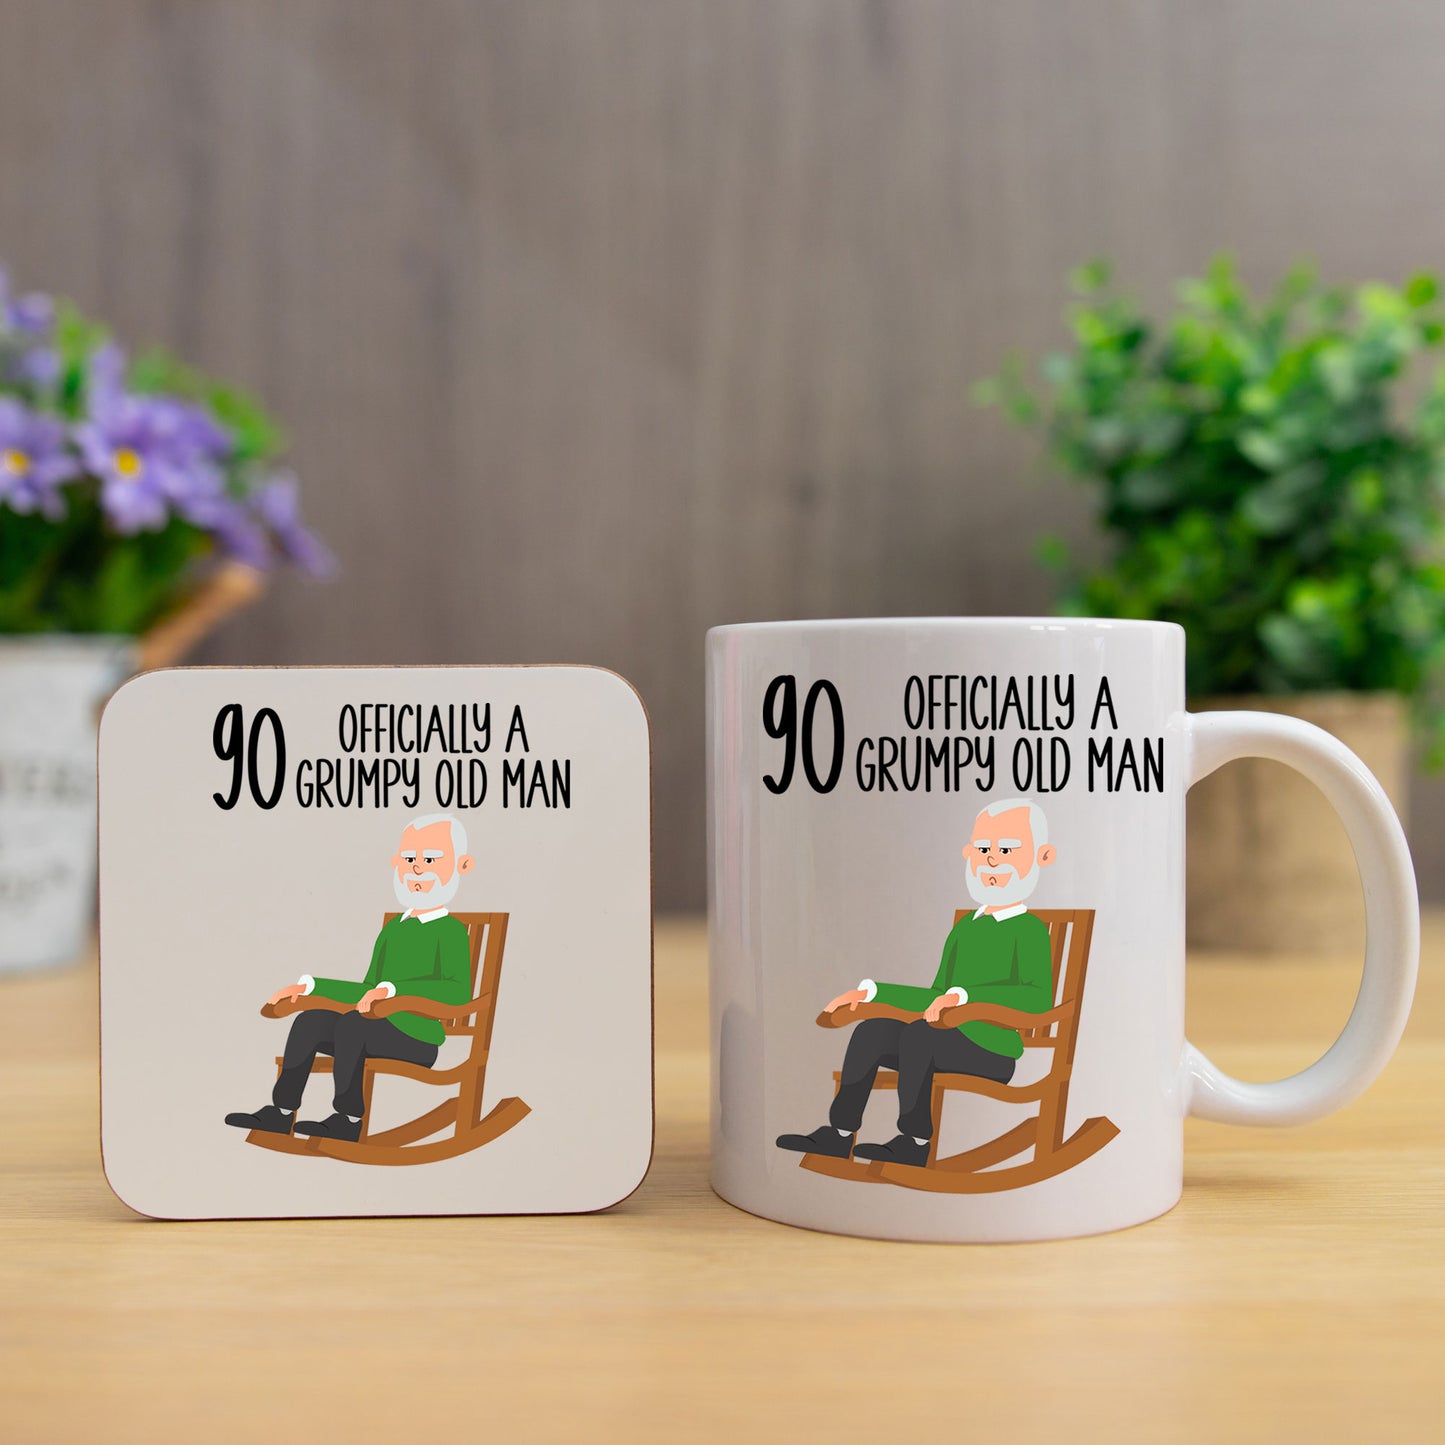 90th Officially A Grumpy Old Man Mug and/or Coaster Gift  - Always Looking Good - Mug & Coaster Set  